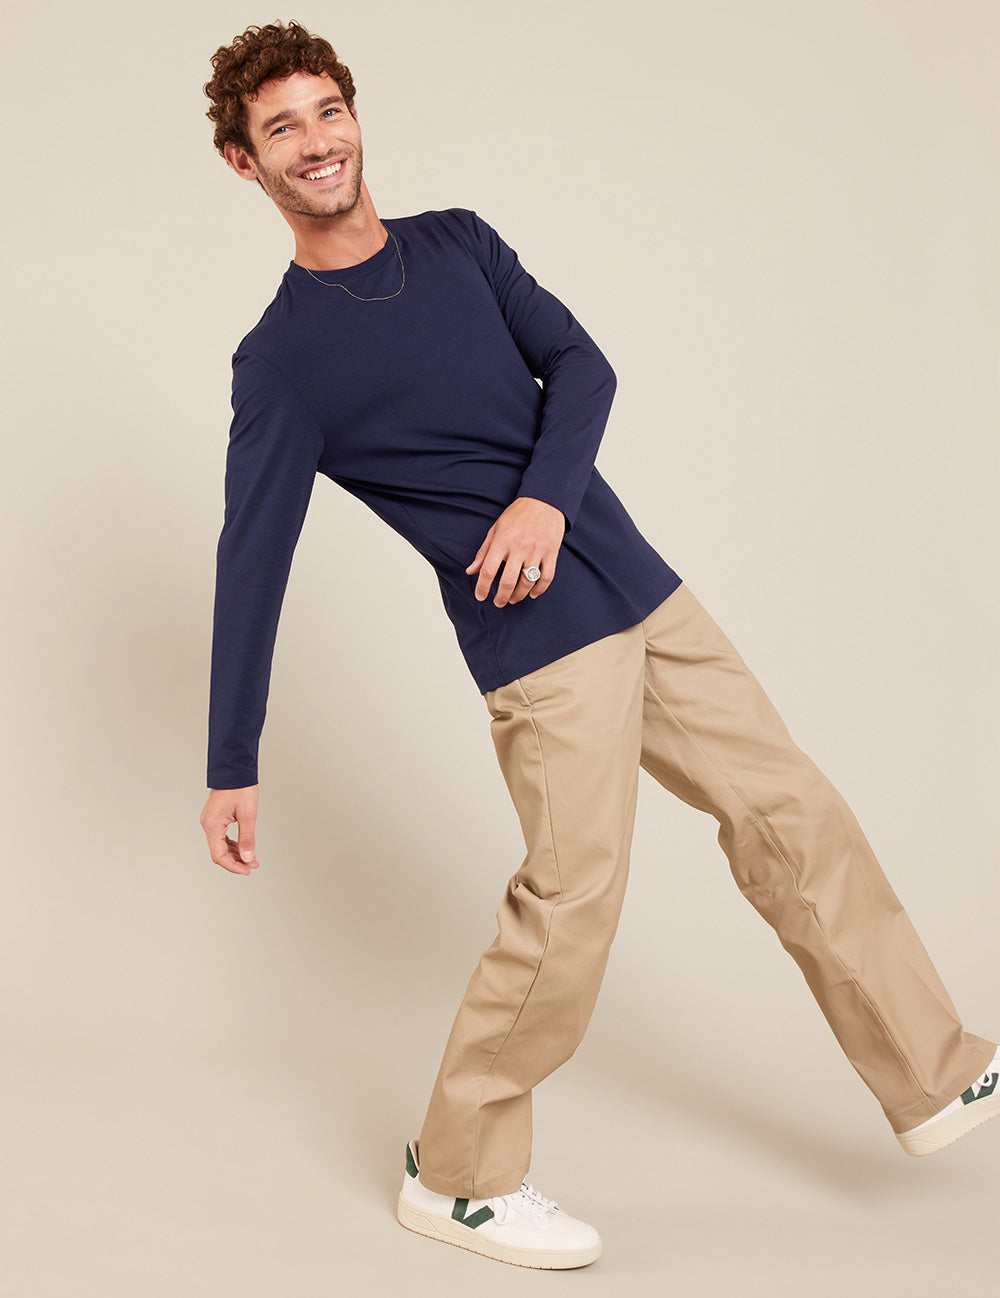 Men_s-Classic-Long-Sleeve-T-Shirt-Navy-Side-2.jpg